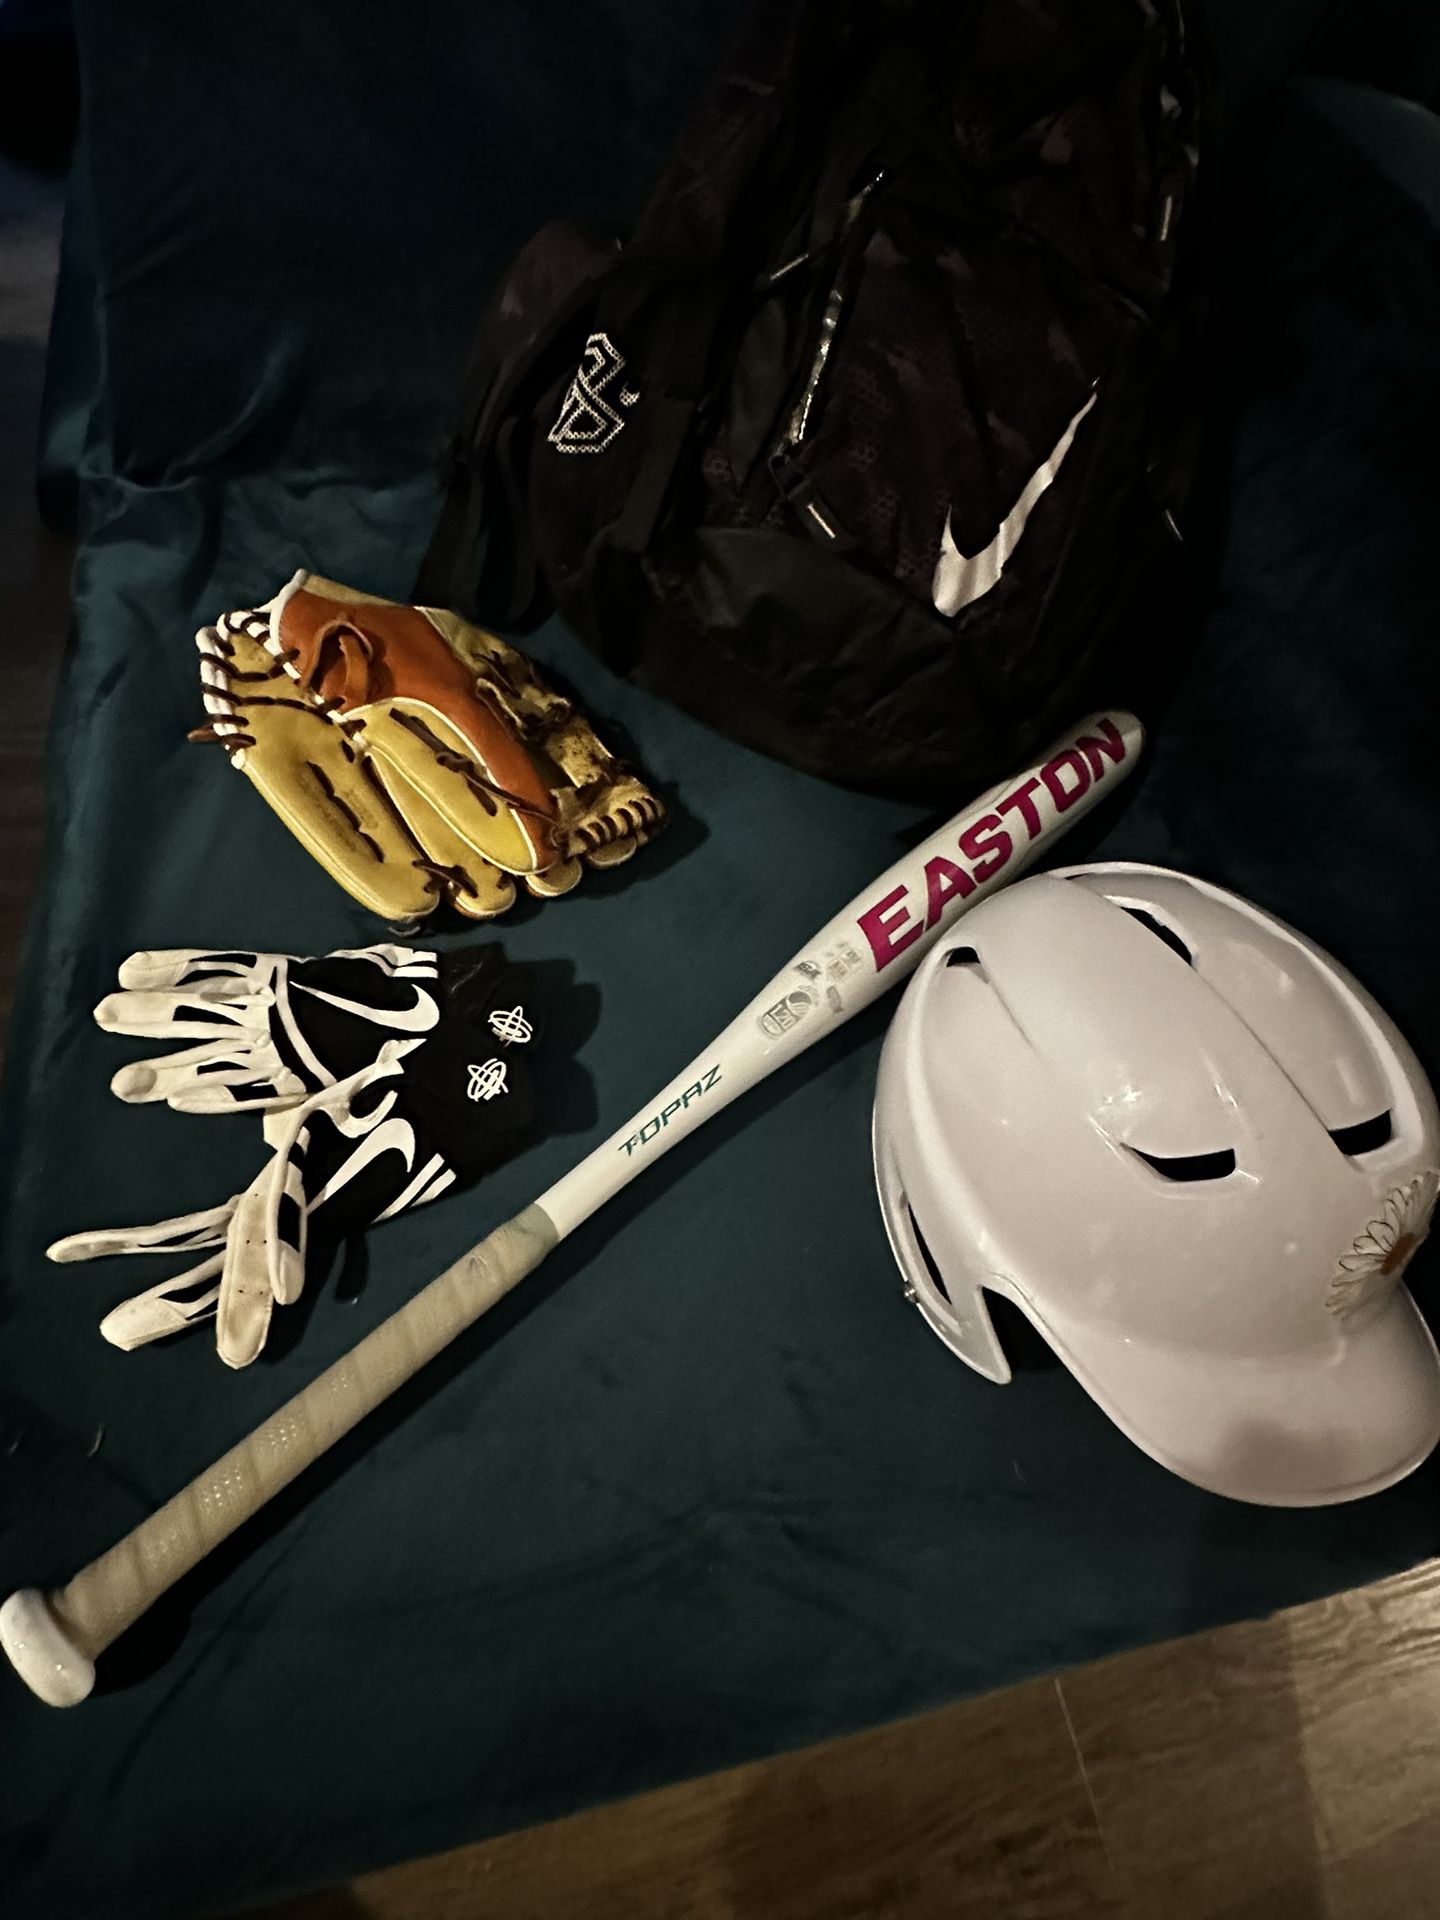 Kids Softball-Baseball Lot: Mitt, Batting Gloves, Bat, Batting Helmet & Bat Bag